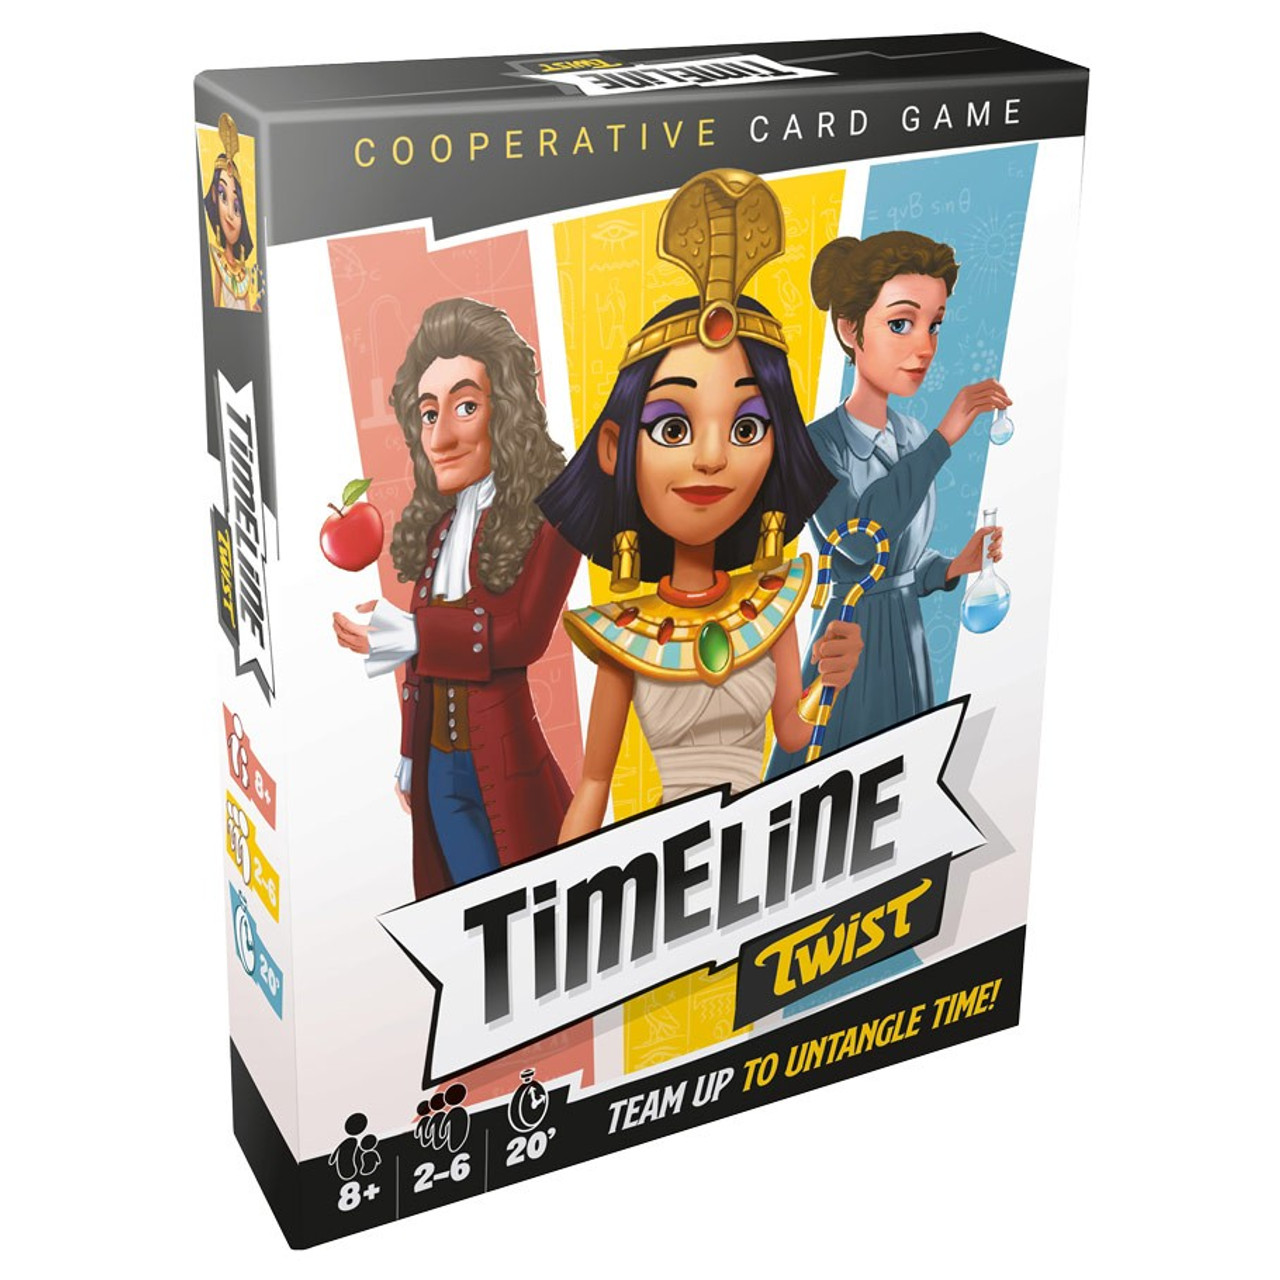 Card Games: Timeline Twist